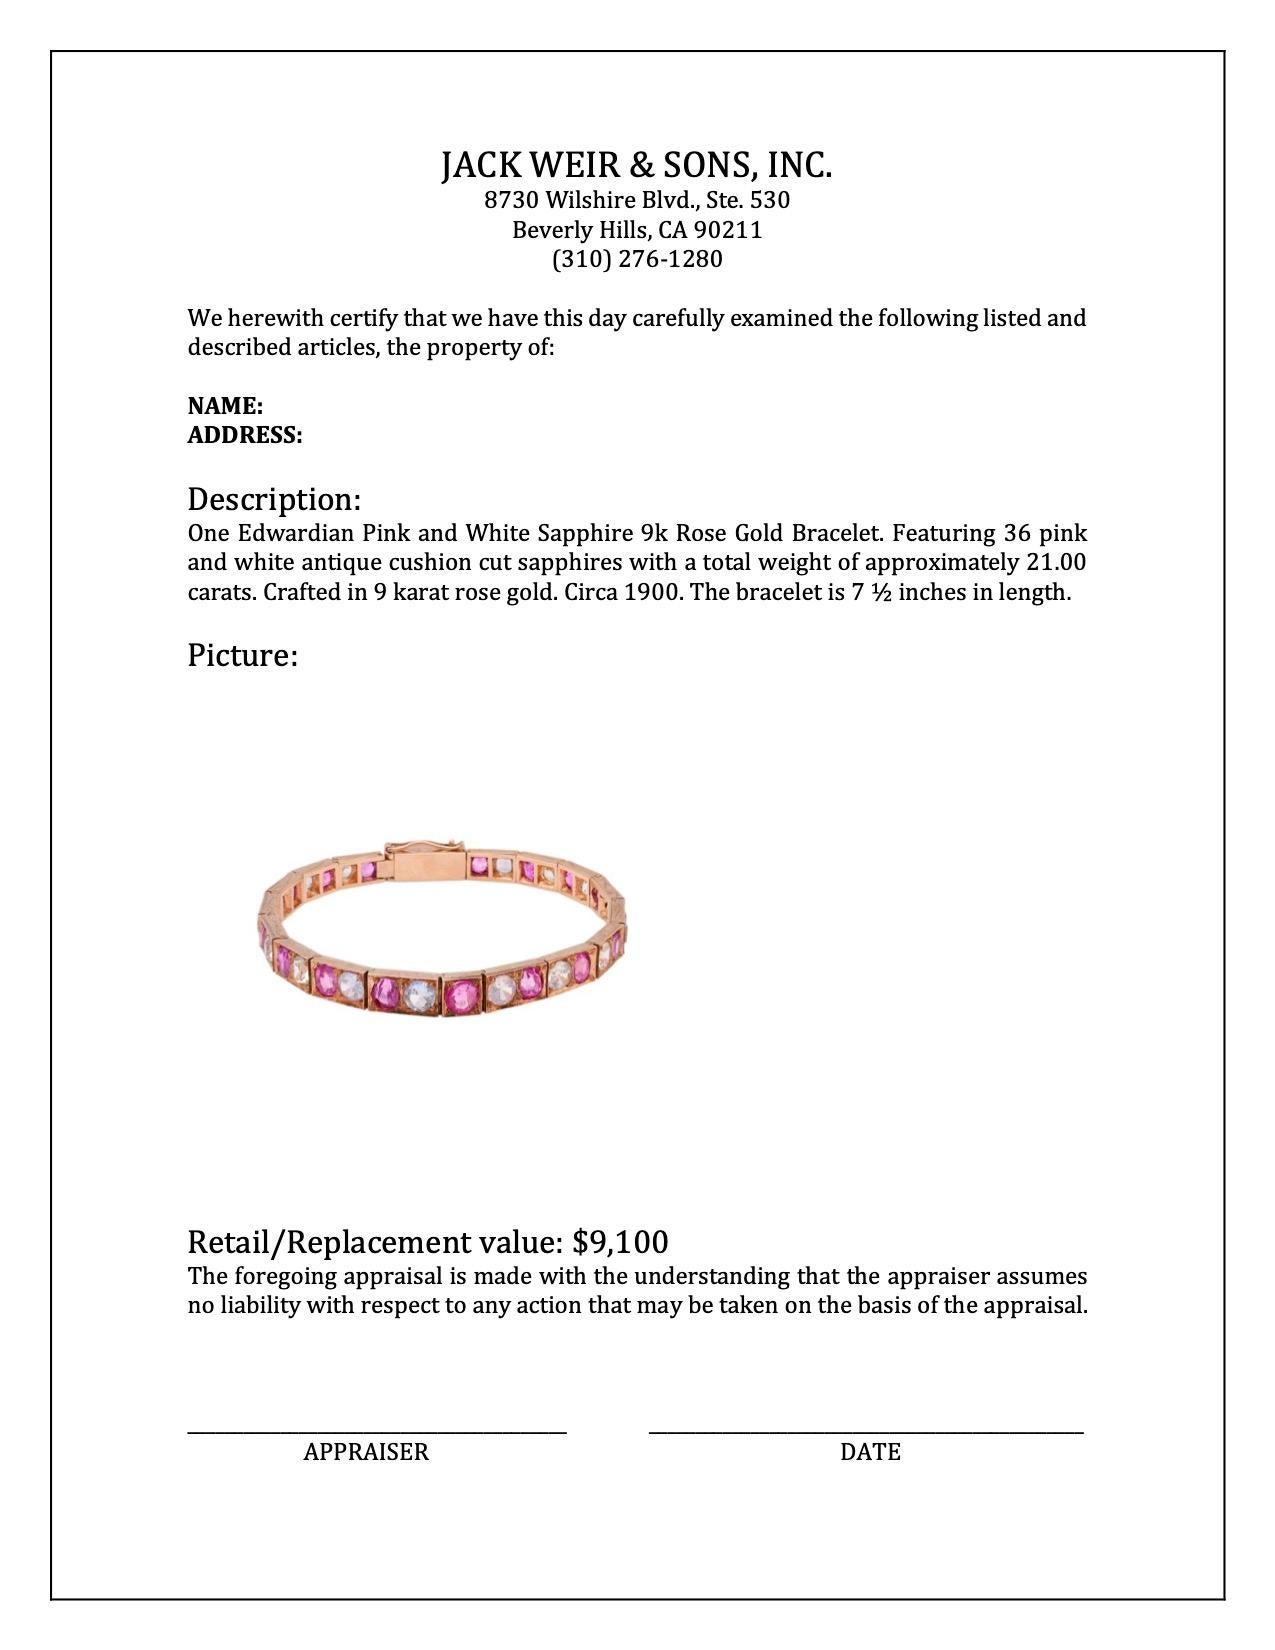 Edwardian Pink and White Sapphire 9k Rose Gold Bracelet 1